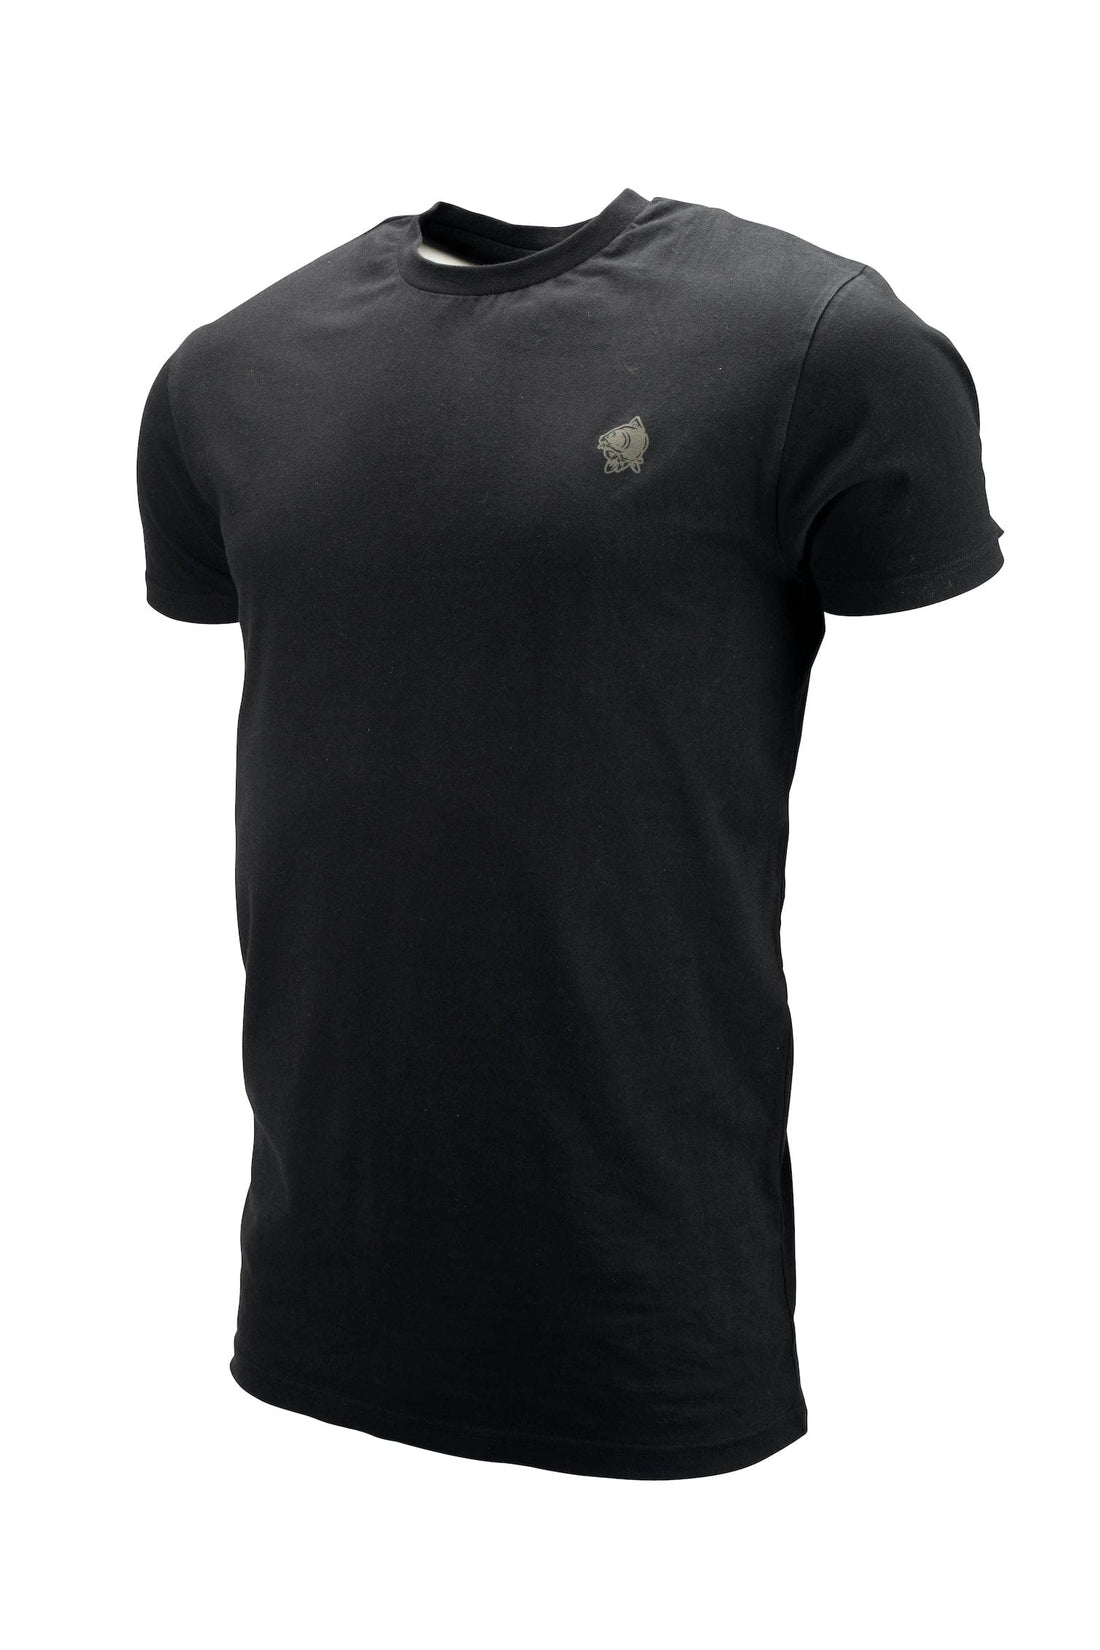 Nash Tackle T-Shirt Black XLarge